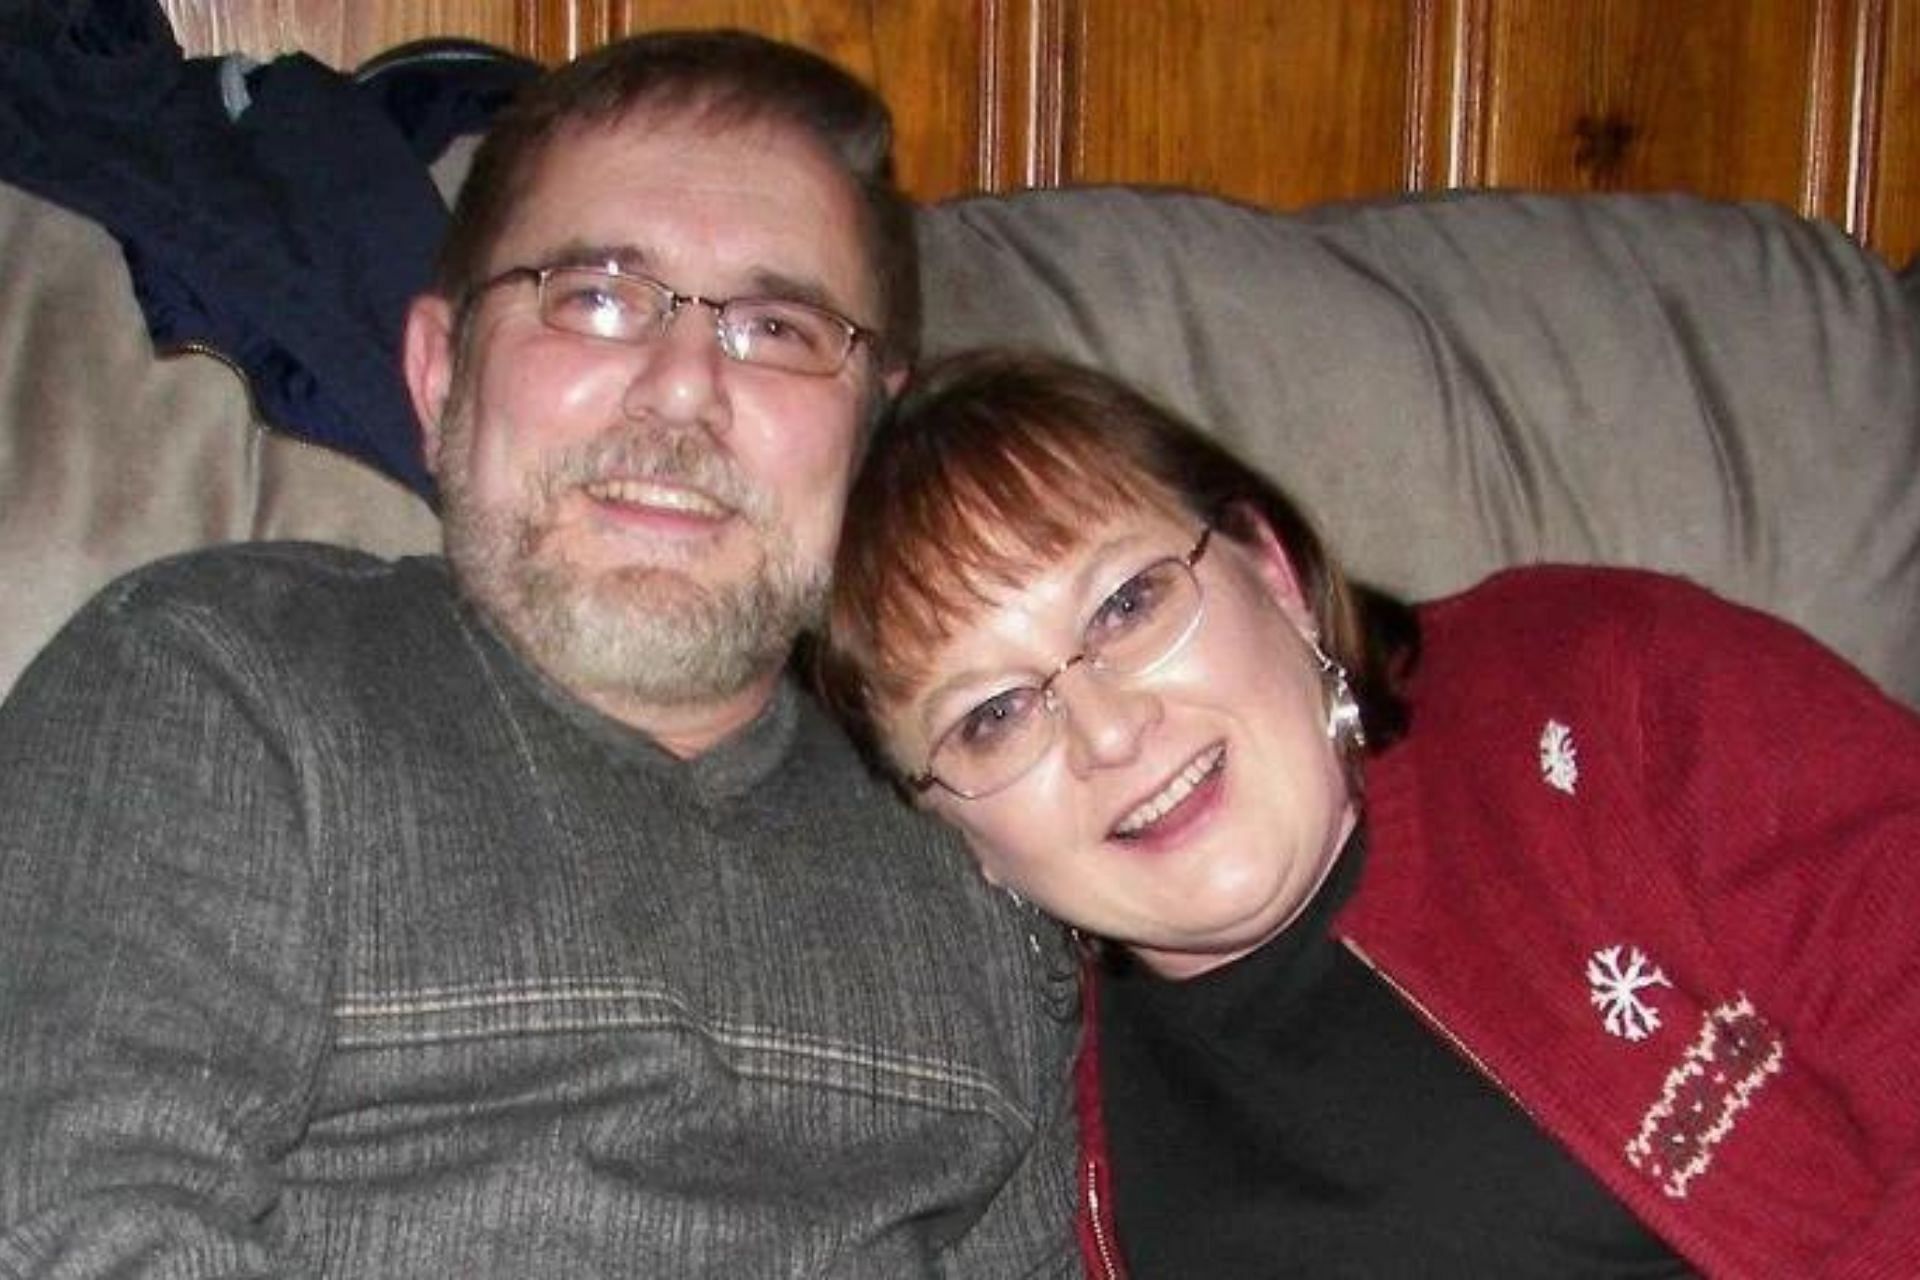 Nicholas Sheley murdered Jill and Tom Estes in June 2008 (Image via SpikyTV)